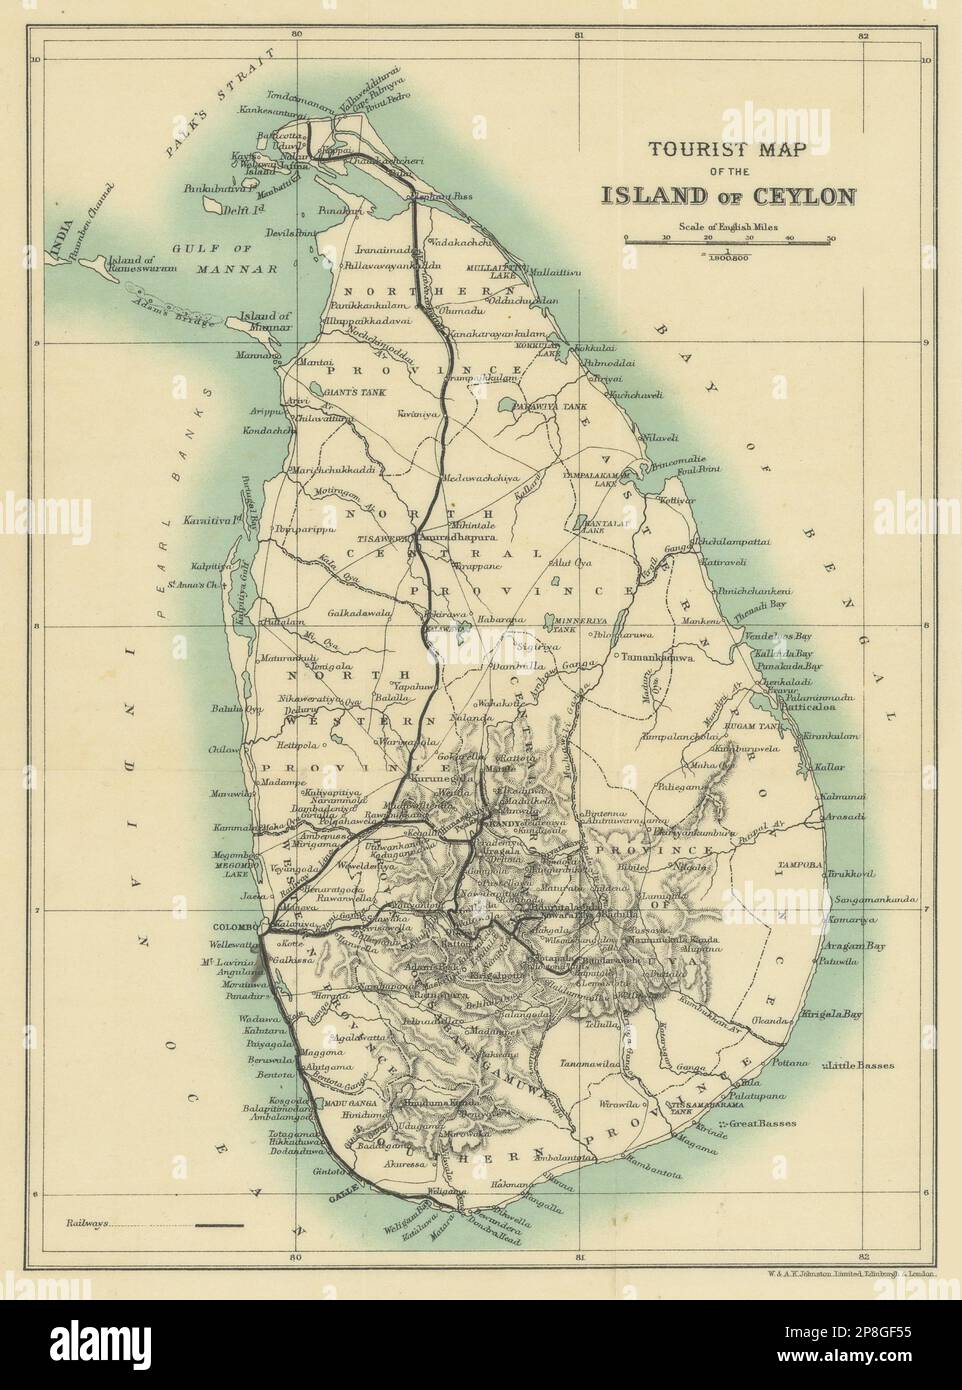 Tourist map of the island of Ceylon. Sri Lanka. British India 1905 old Stock Photo